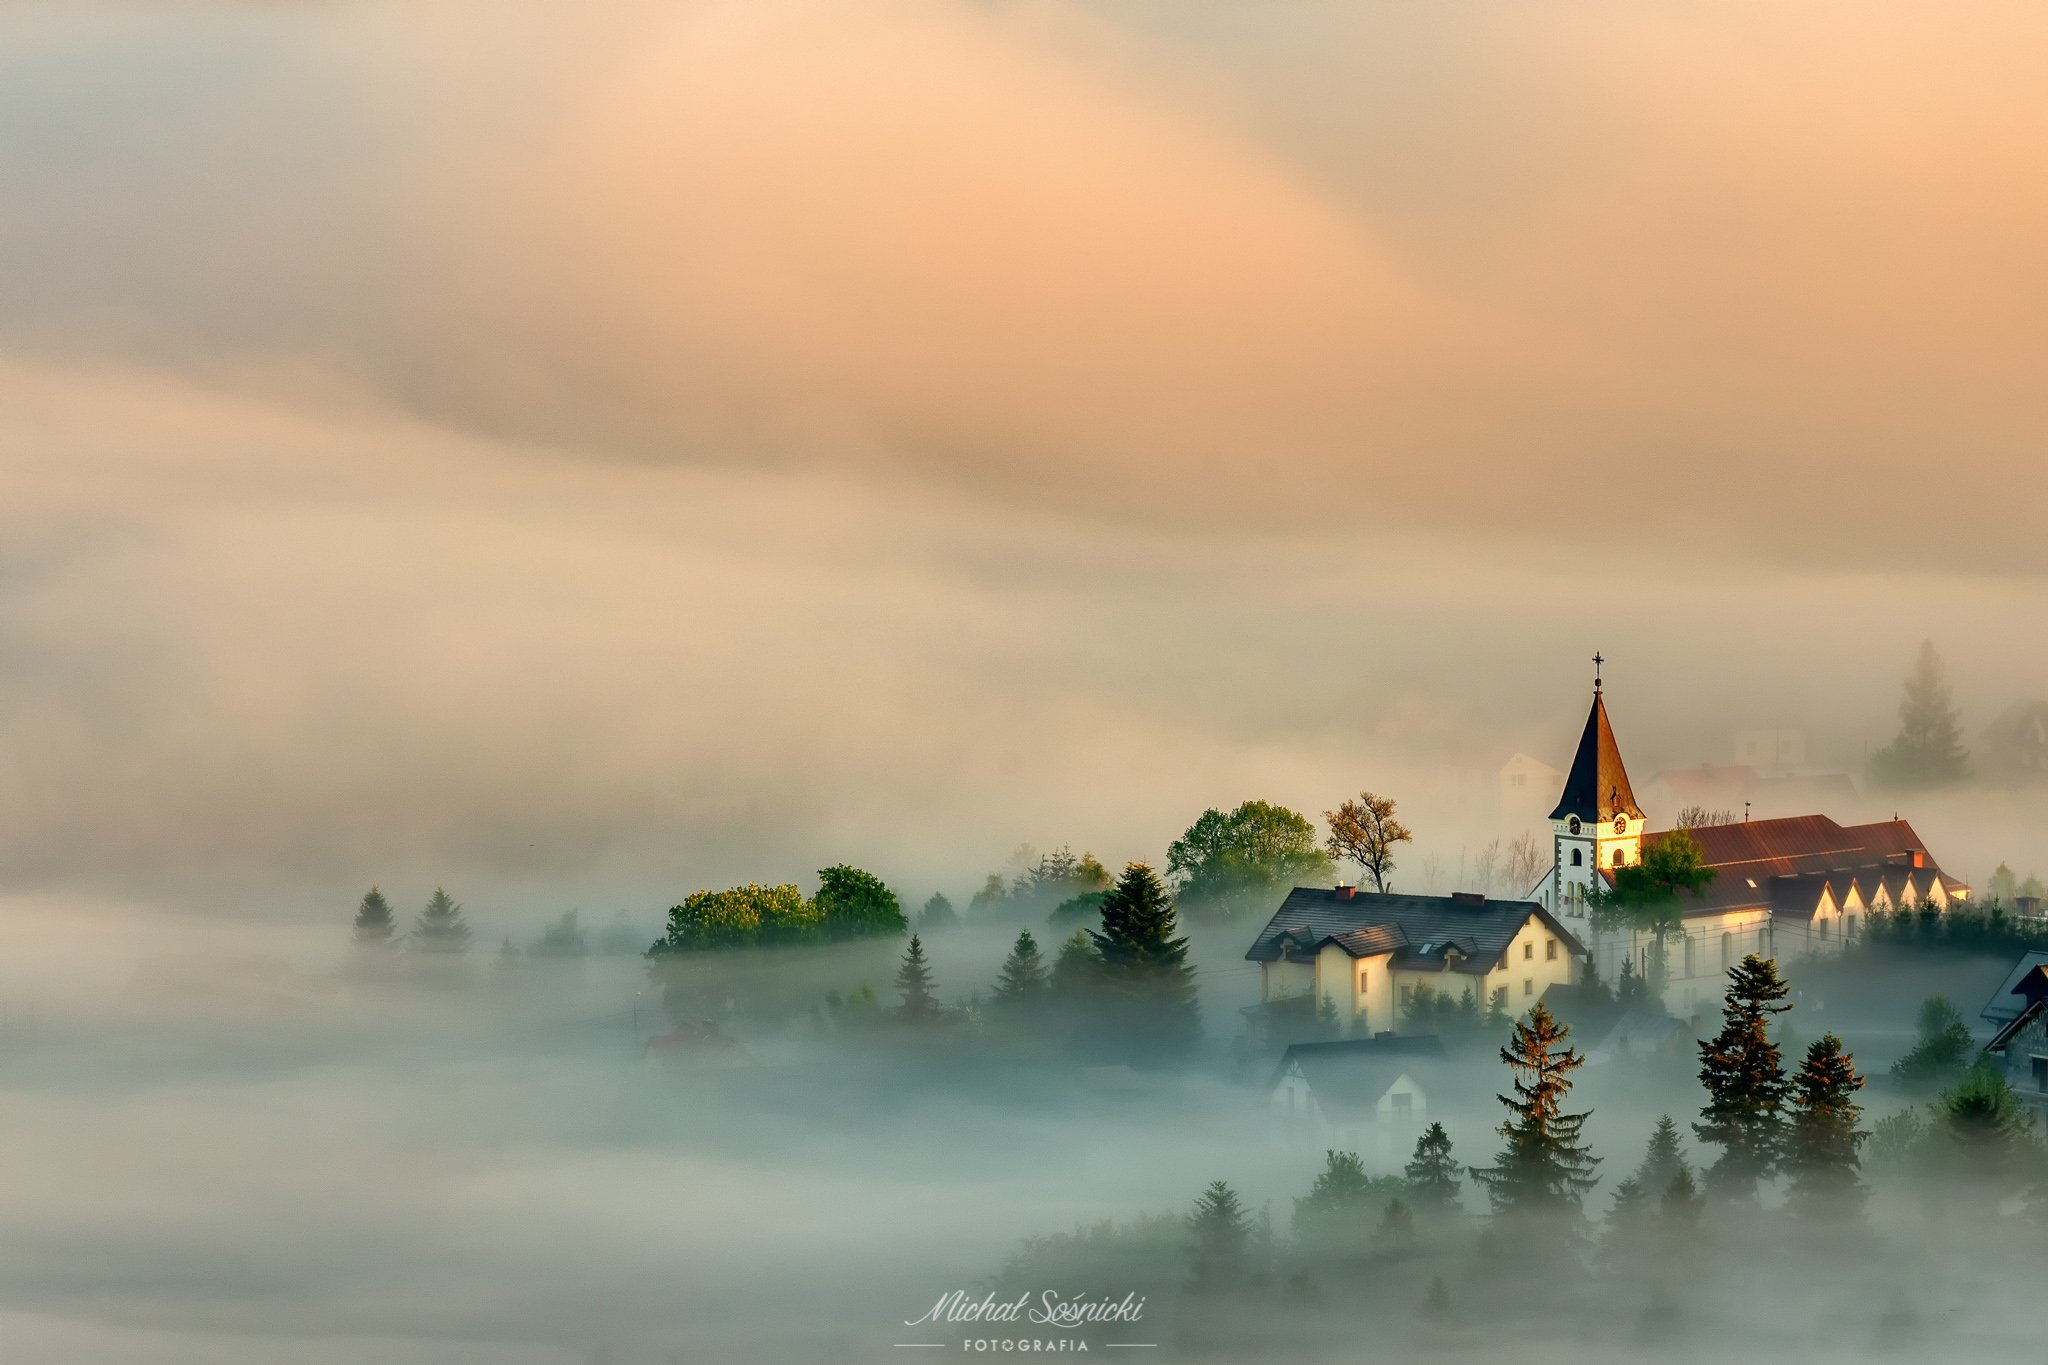 #sunrise #color #landscape #amazing #nature #sky #clouds #church #foggy, Michał Sośnicki